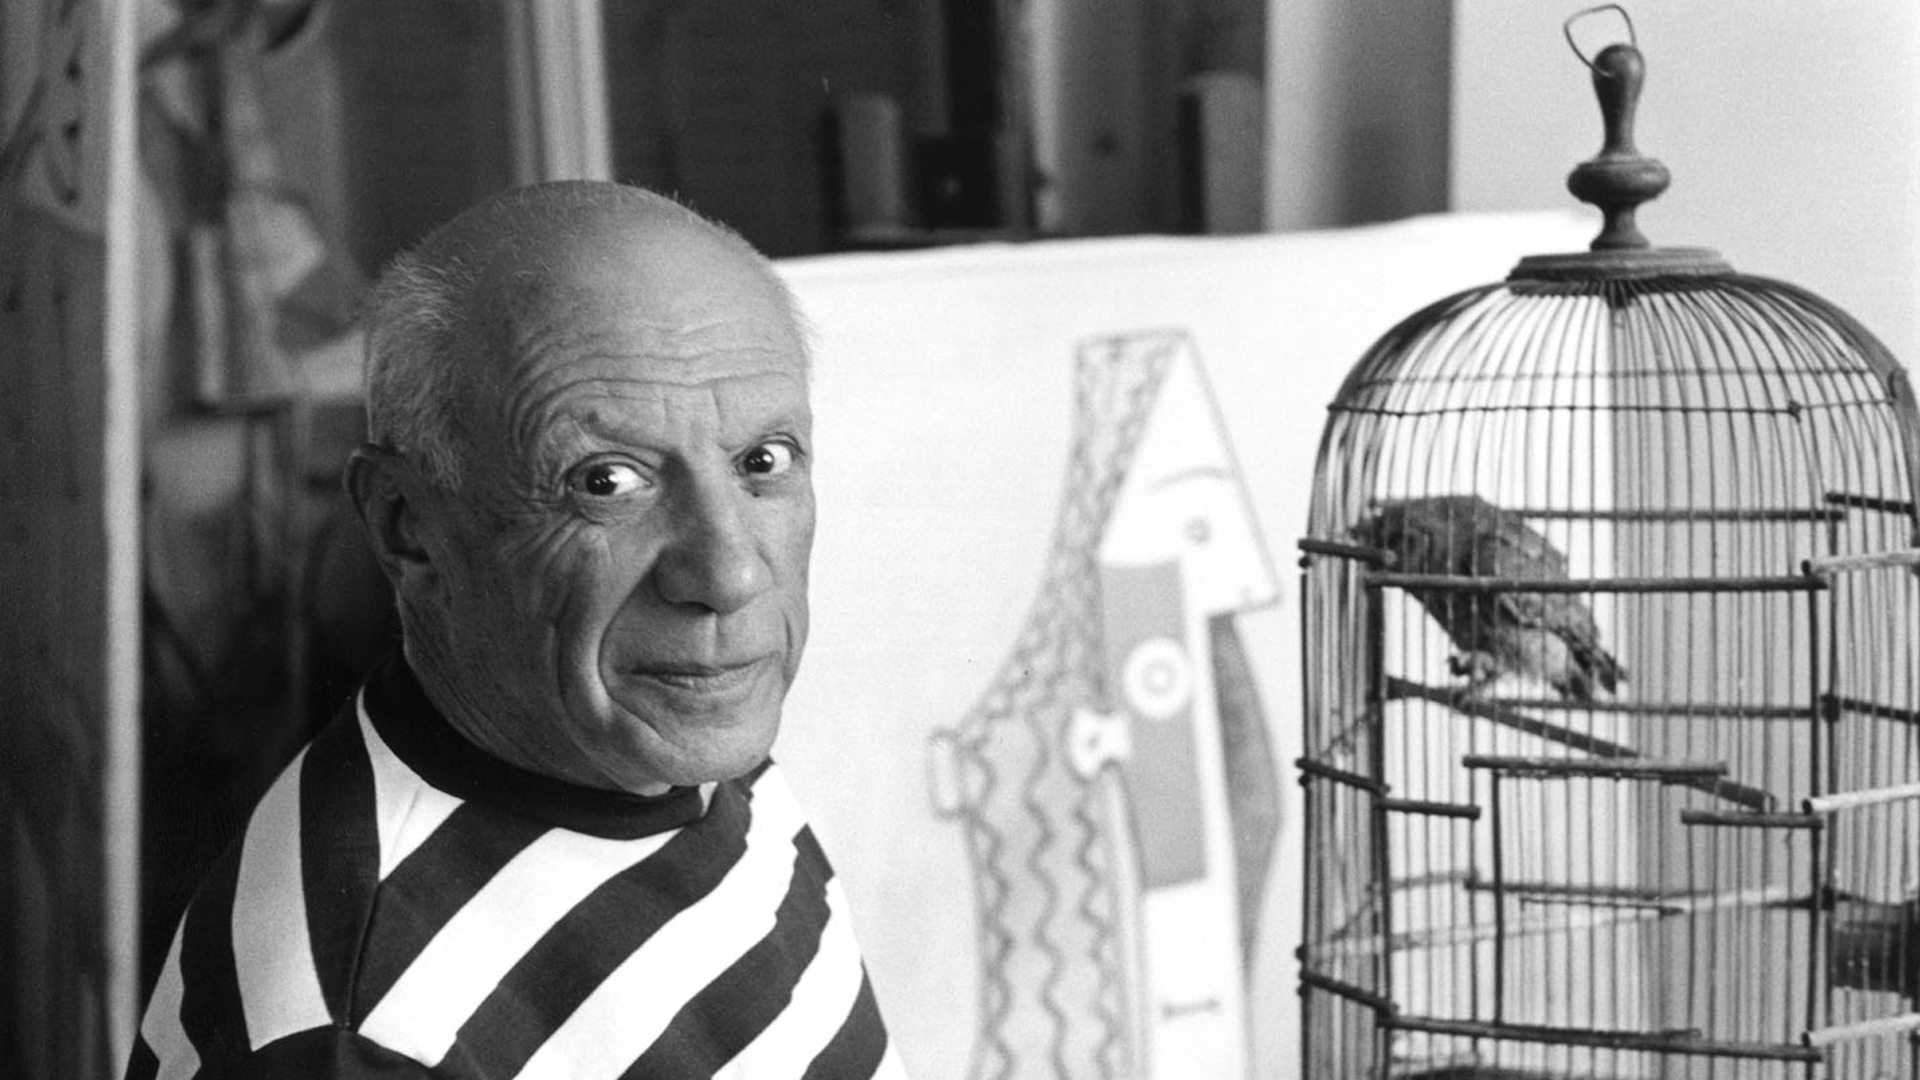 Pablo Picasso, ese forastero que amaba ser odiado en Francia